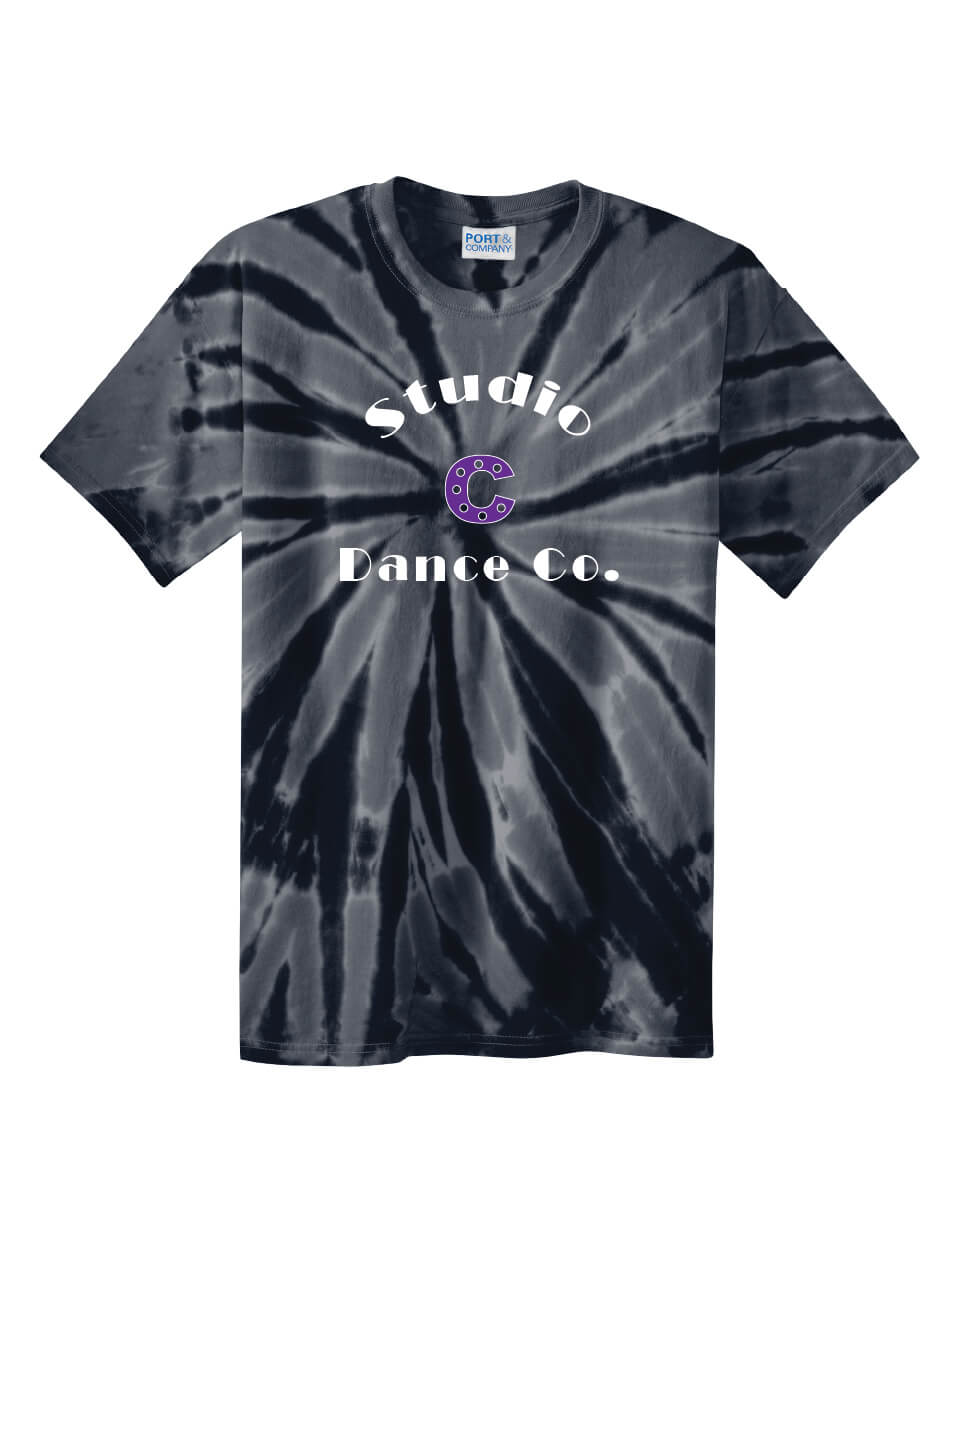 Studio C Tie Dye Short Sleeve T-Shirt (Youth) black